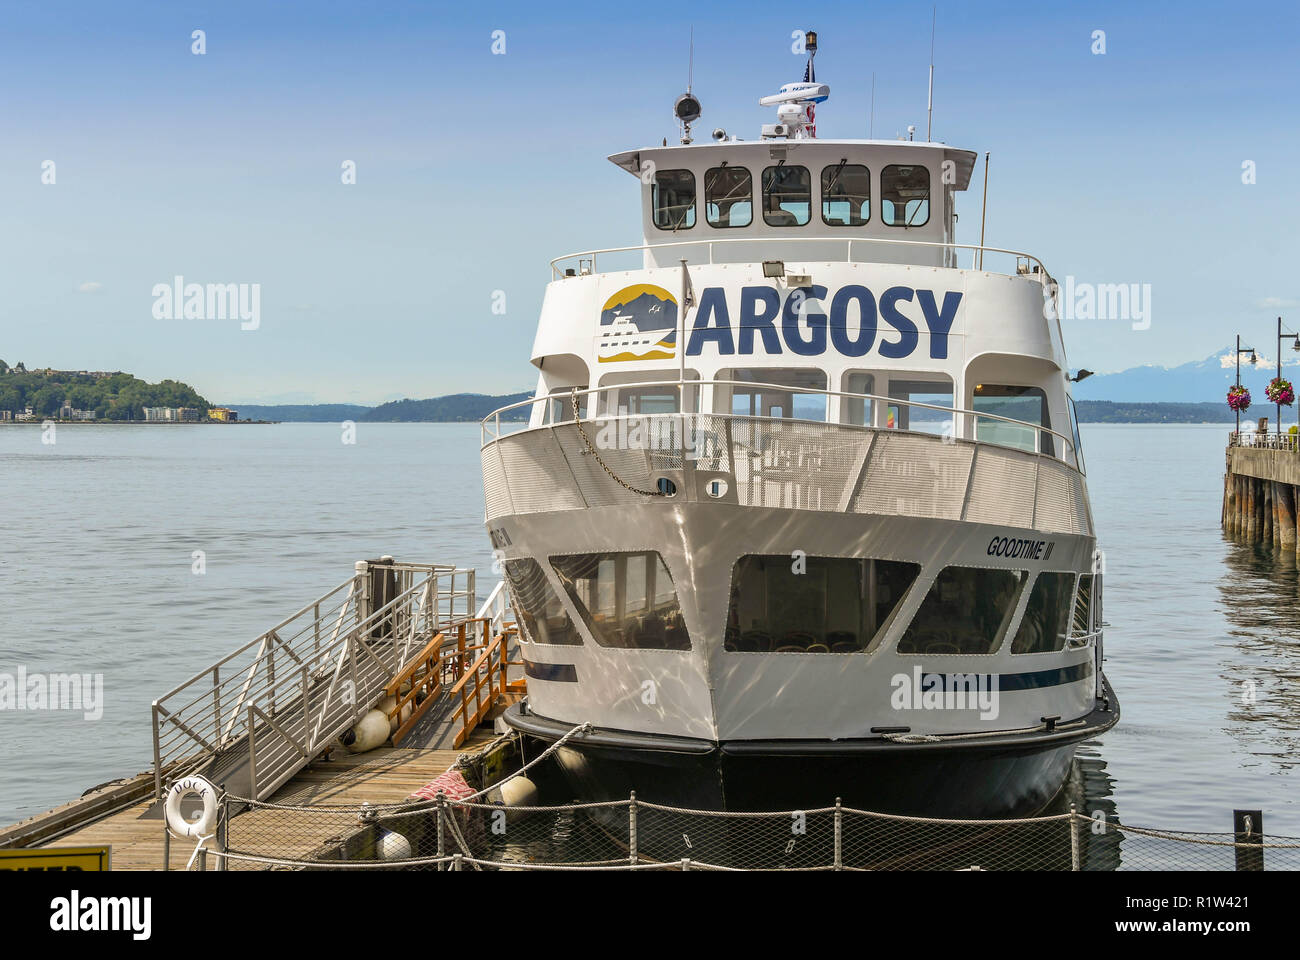 SEATTLE, WASHINGTON STATE, USA - JUNE 2018: Tourist sightseeing cruise boat docked on the waterfront in Seattle. Stock Photo